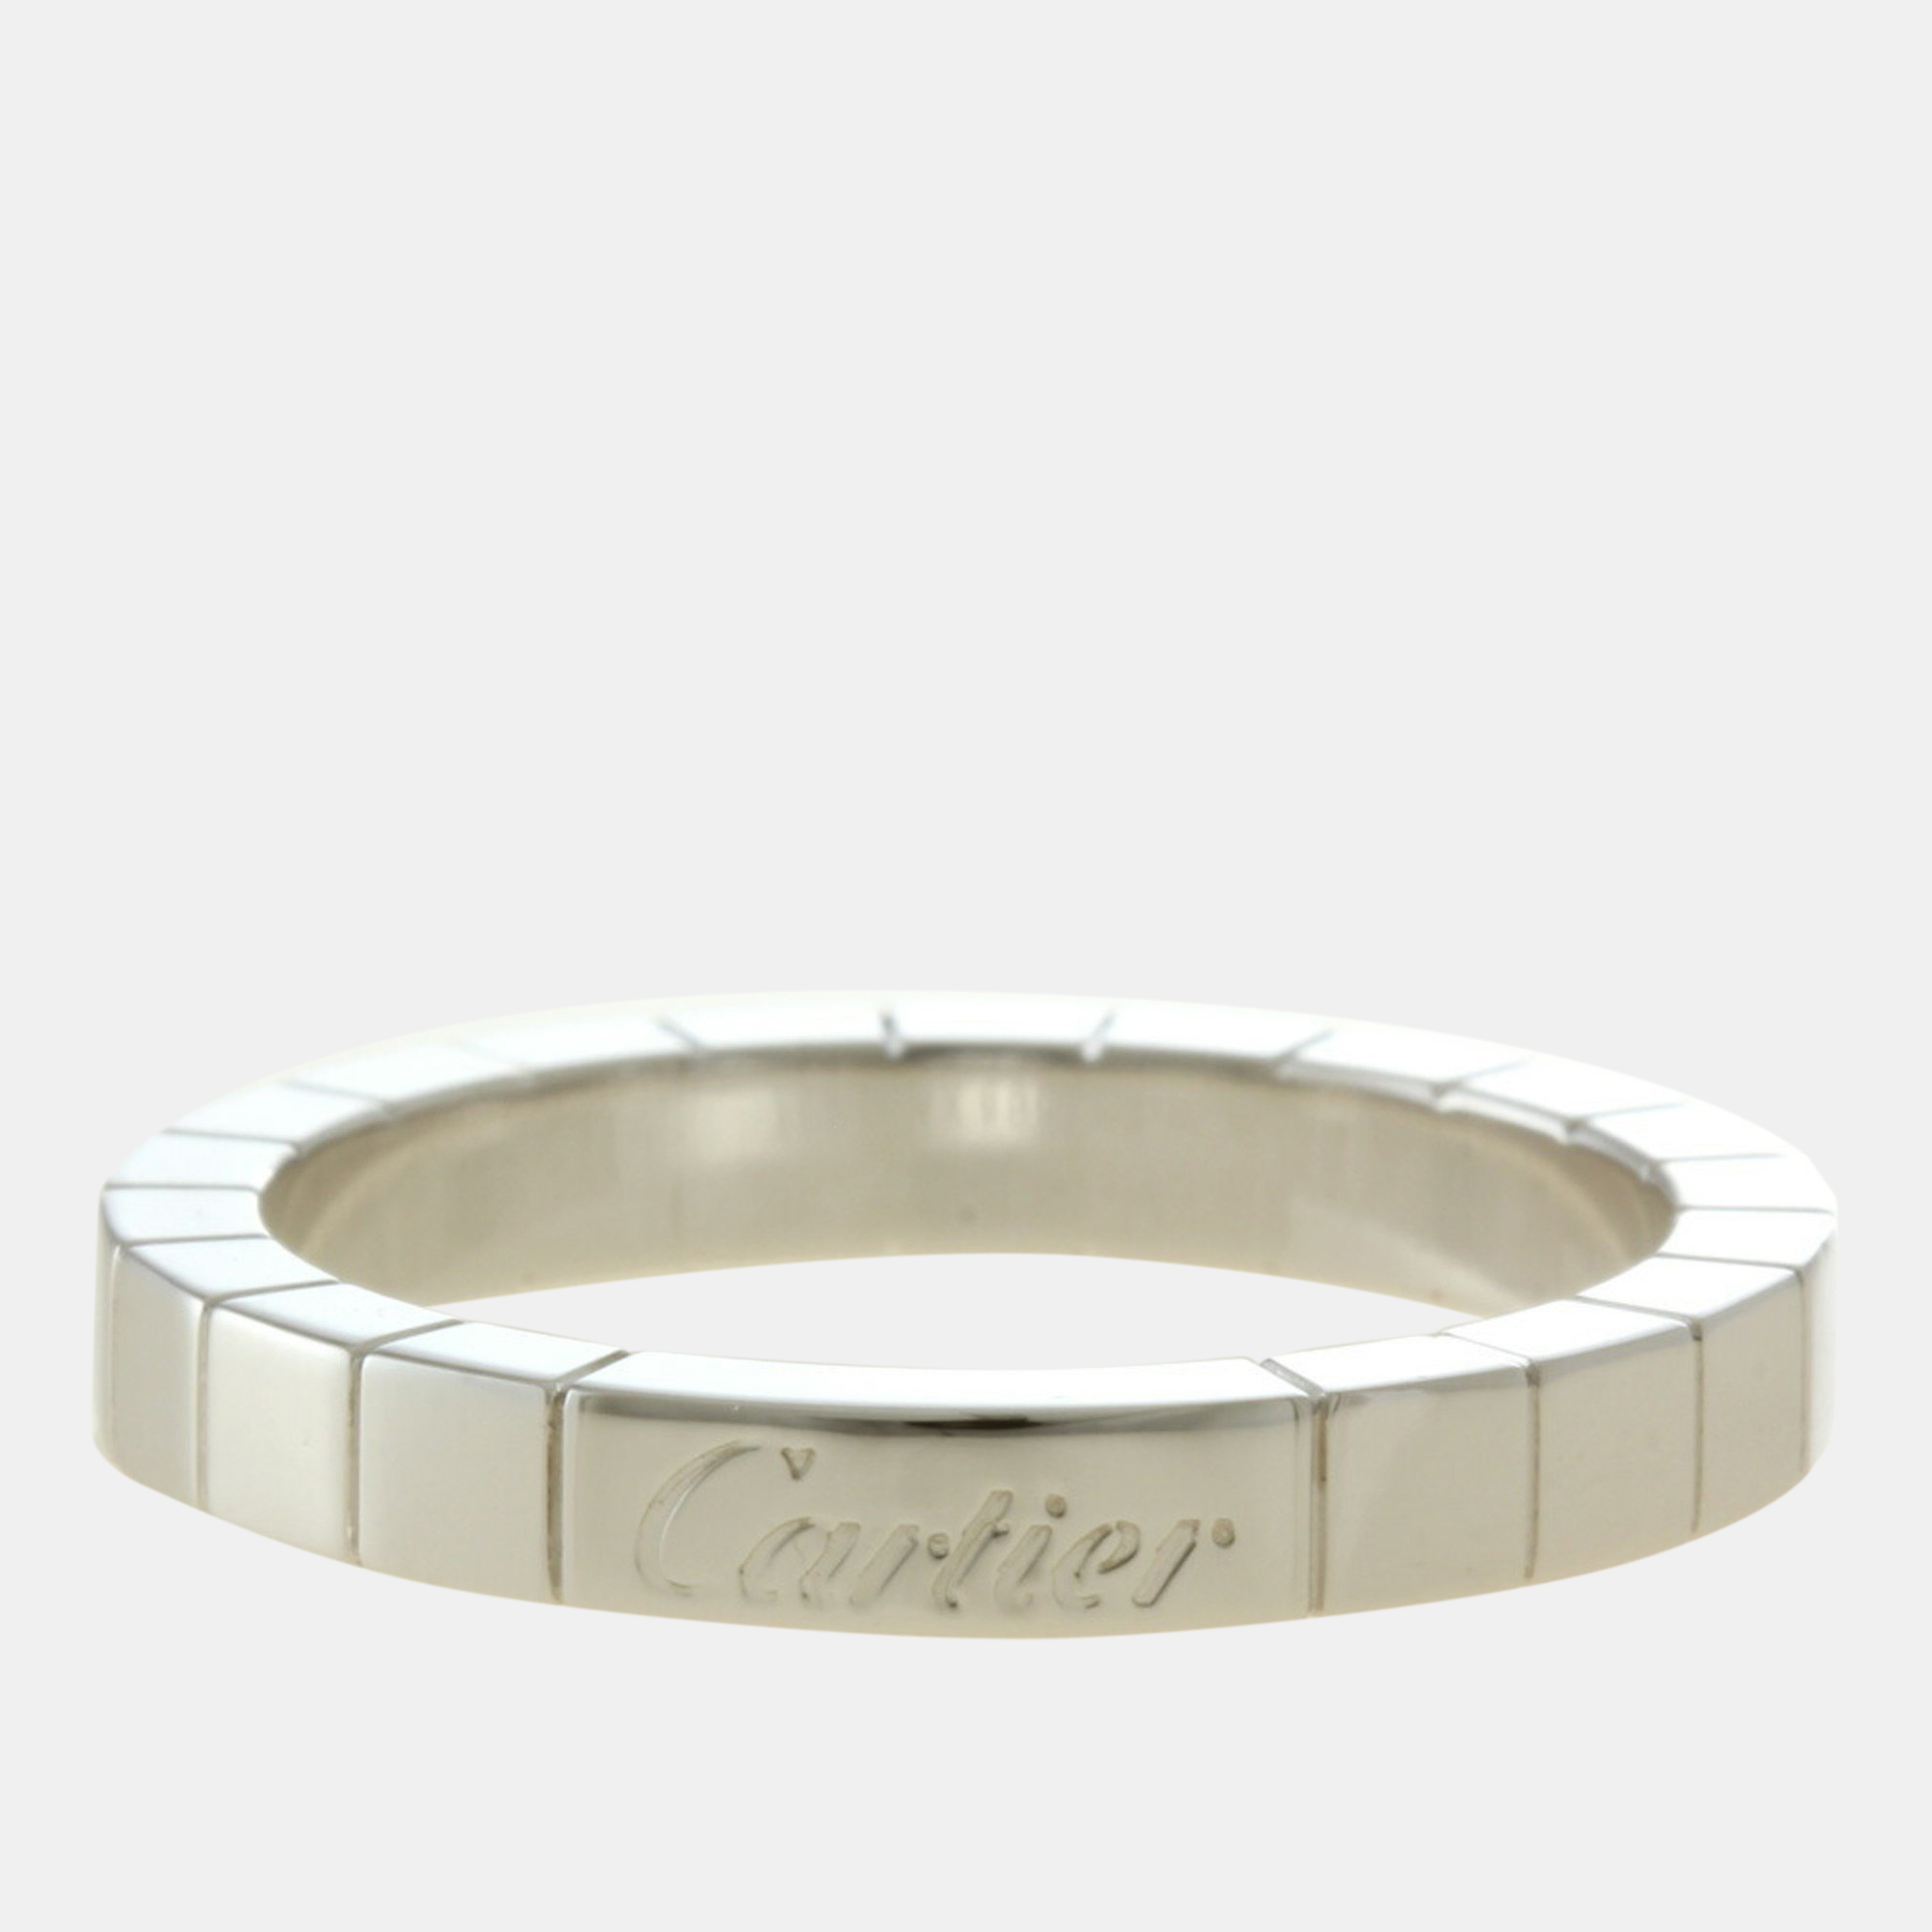 Cartier 18K White Gold Lanieres Band Ring EU 56